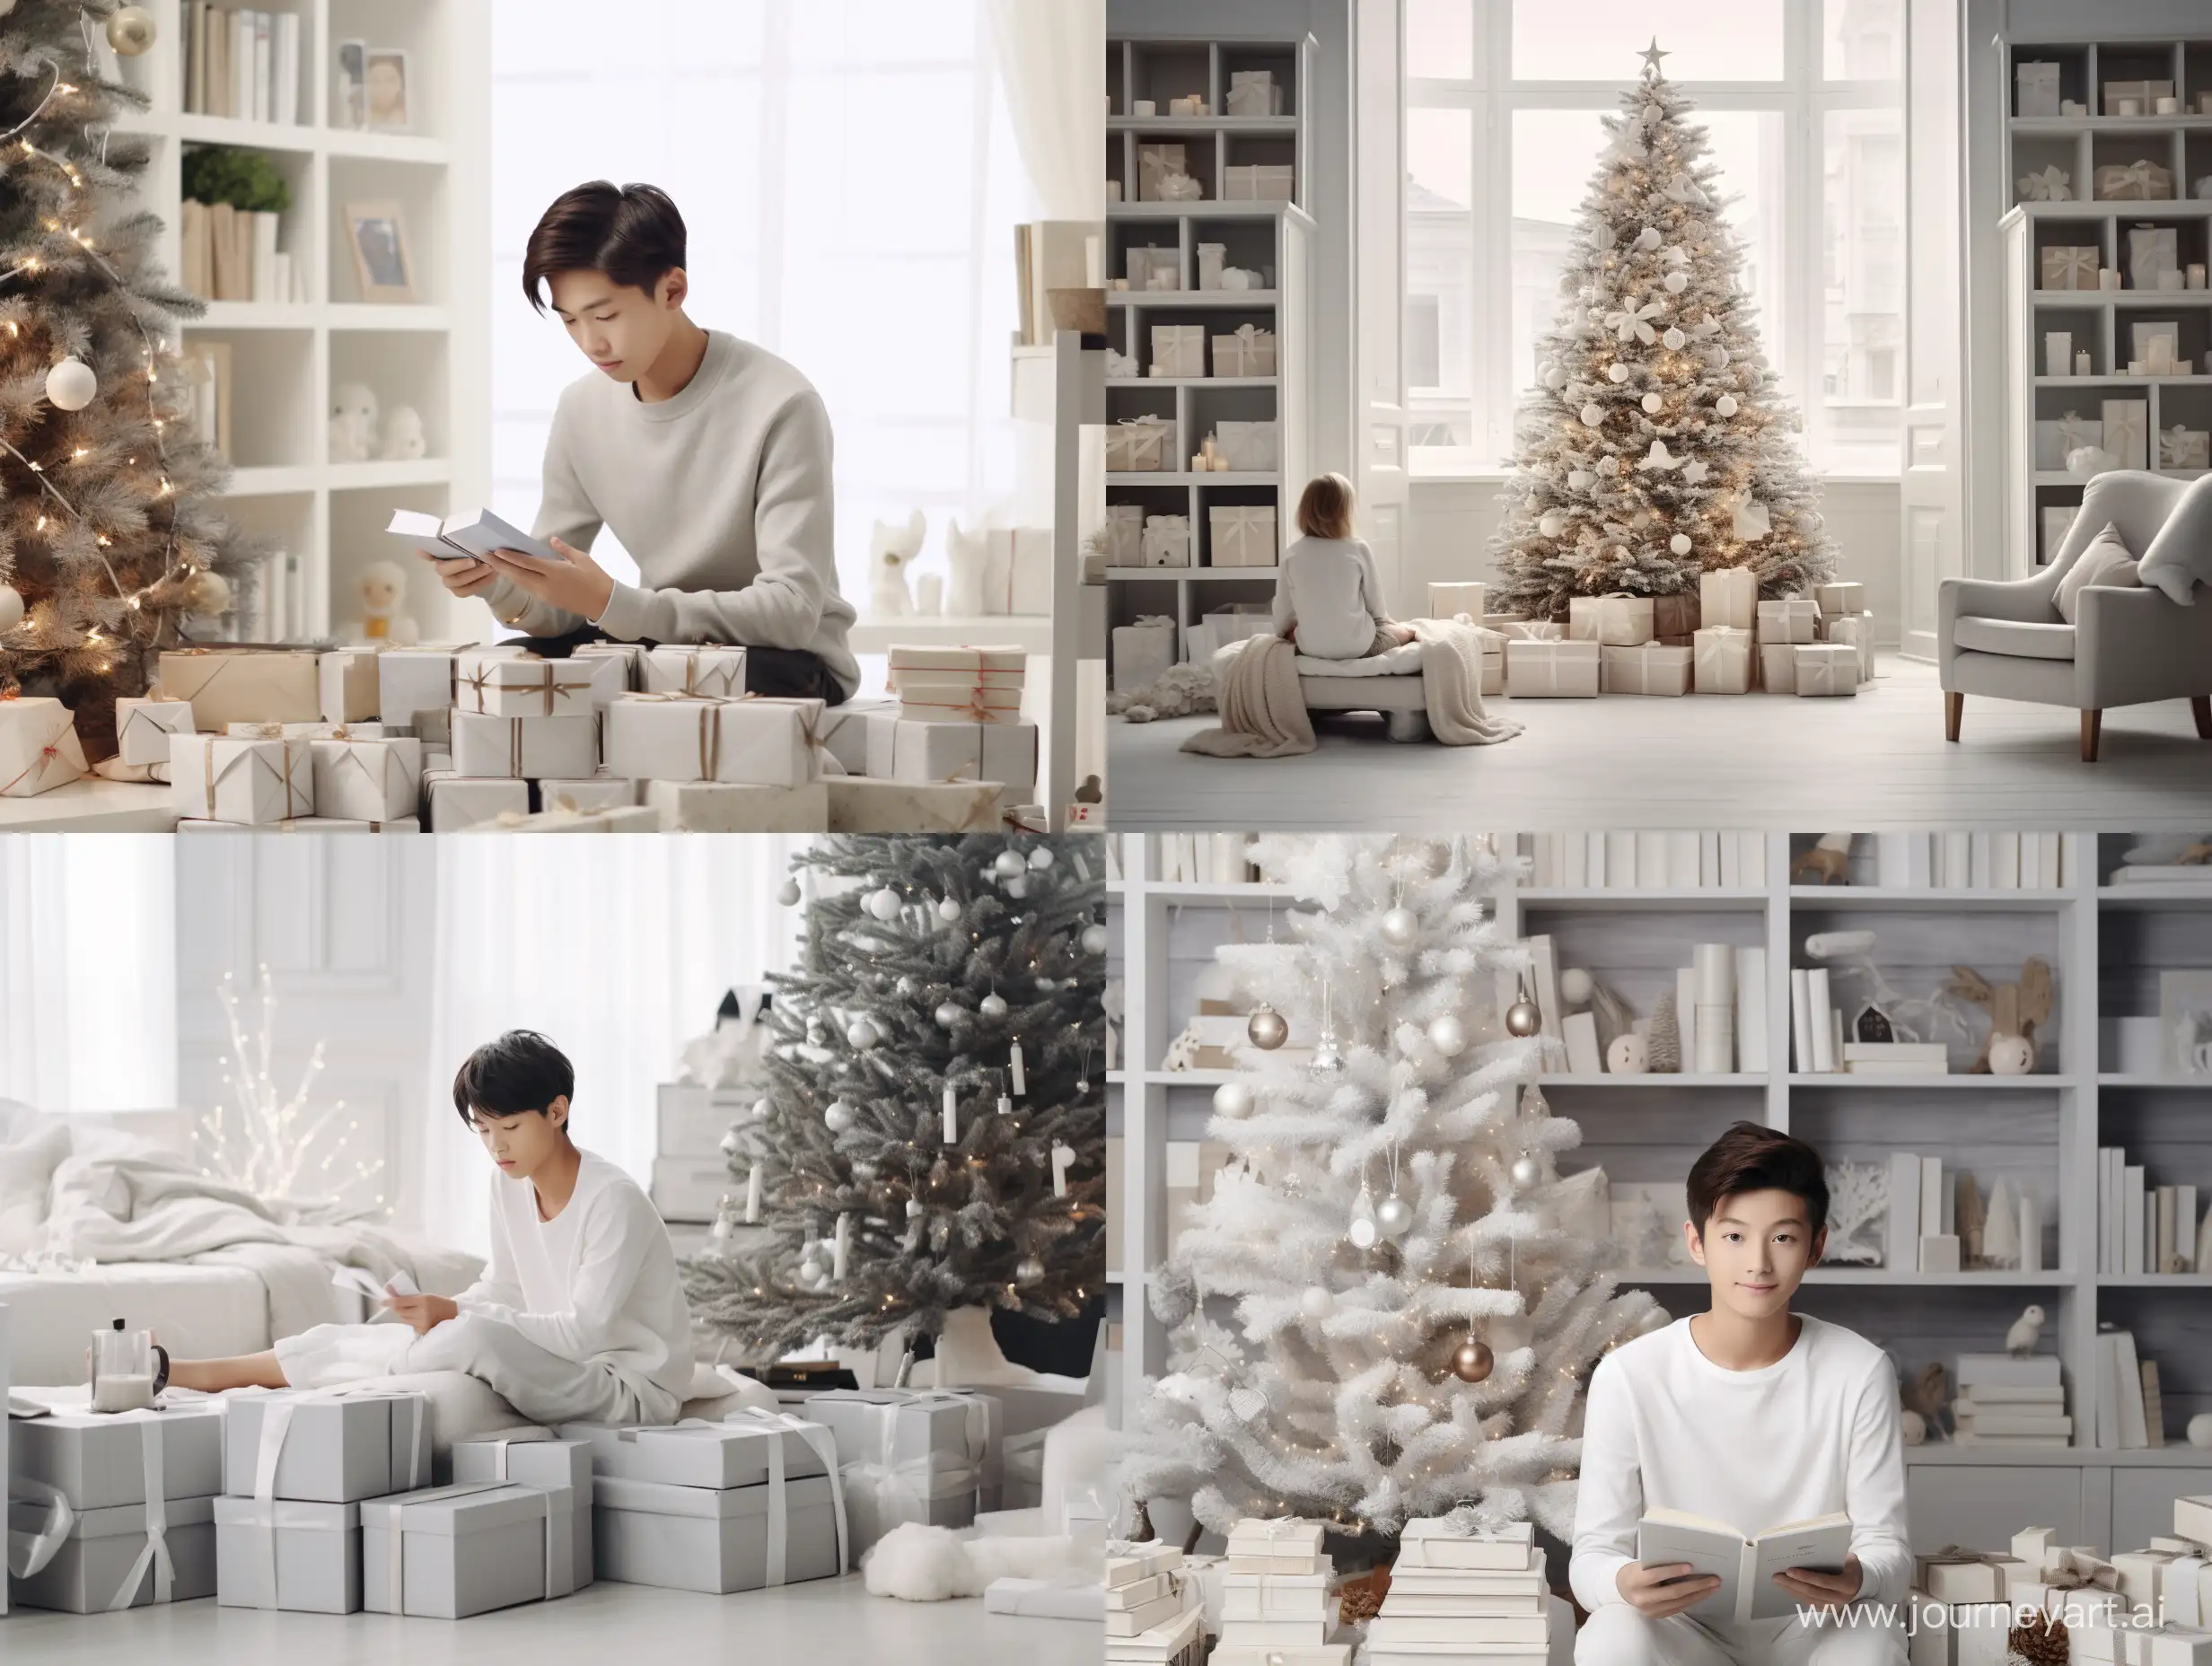 Joyful-Christmas-Morning-Chinese-Teenagers-Delightful-Gift-Experience-in-Nordic-Minimalist-Home